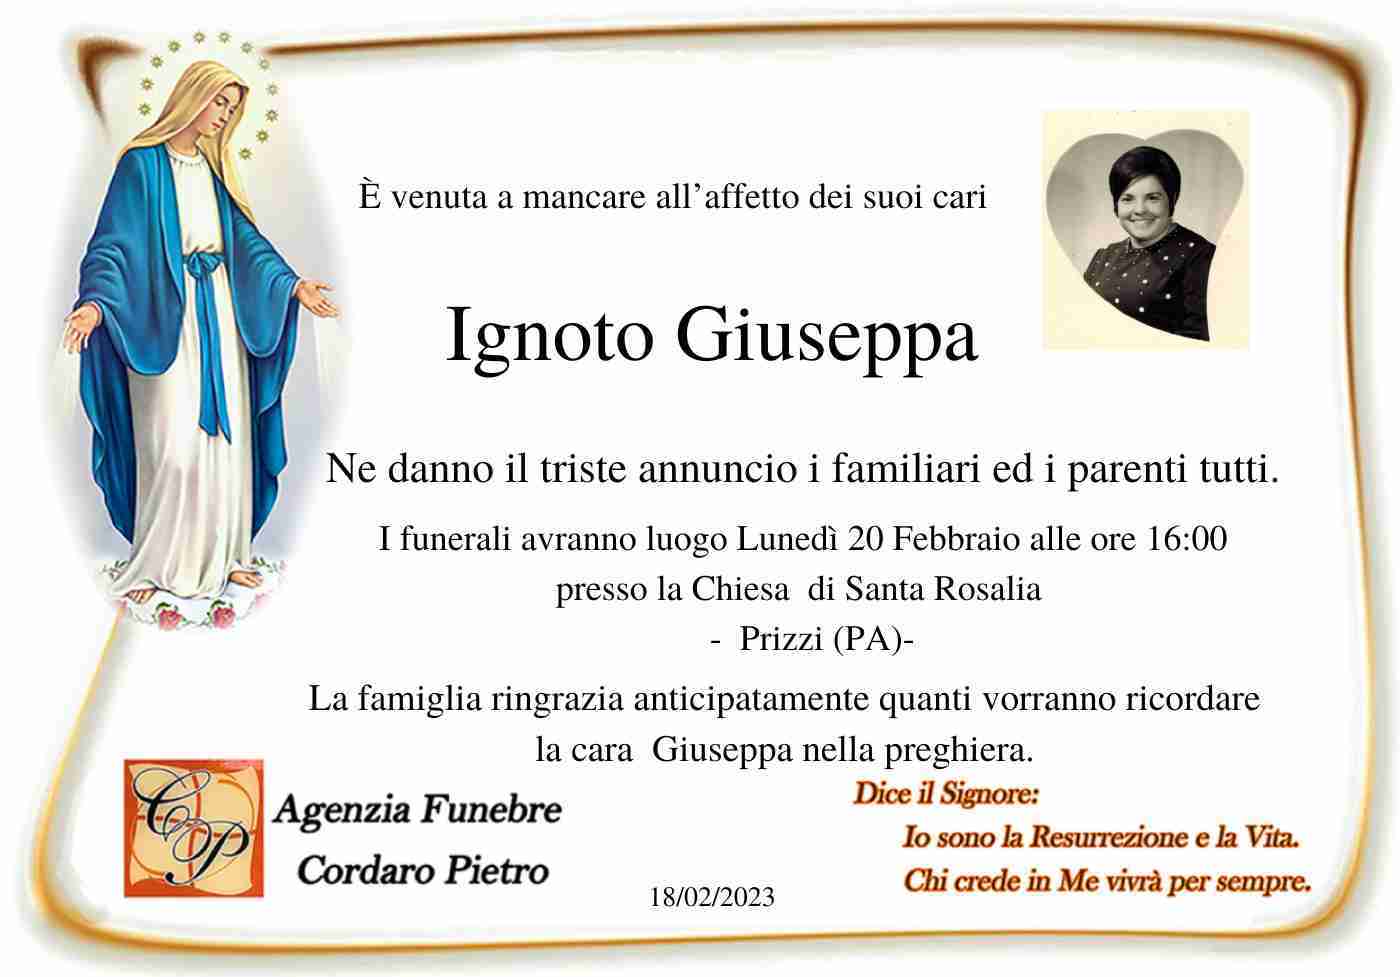 Giuseppa Ignoto